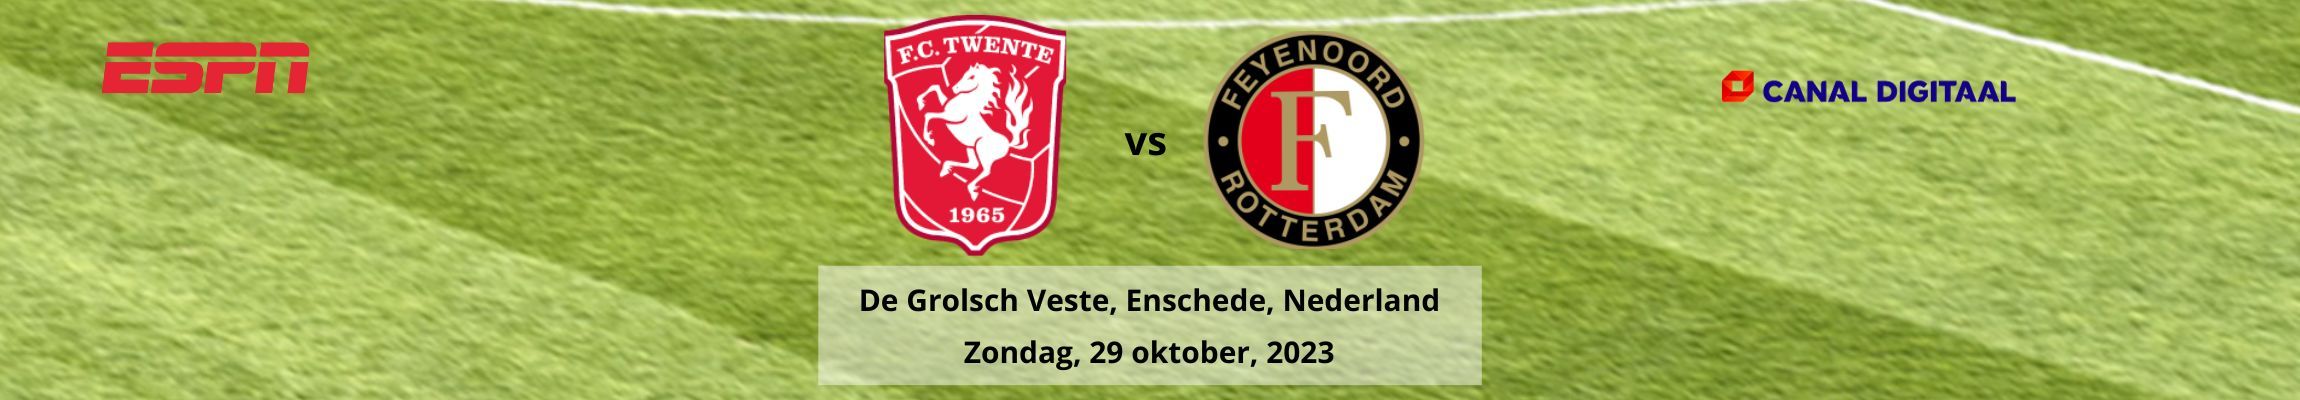 FC Twente vs Feyenoord